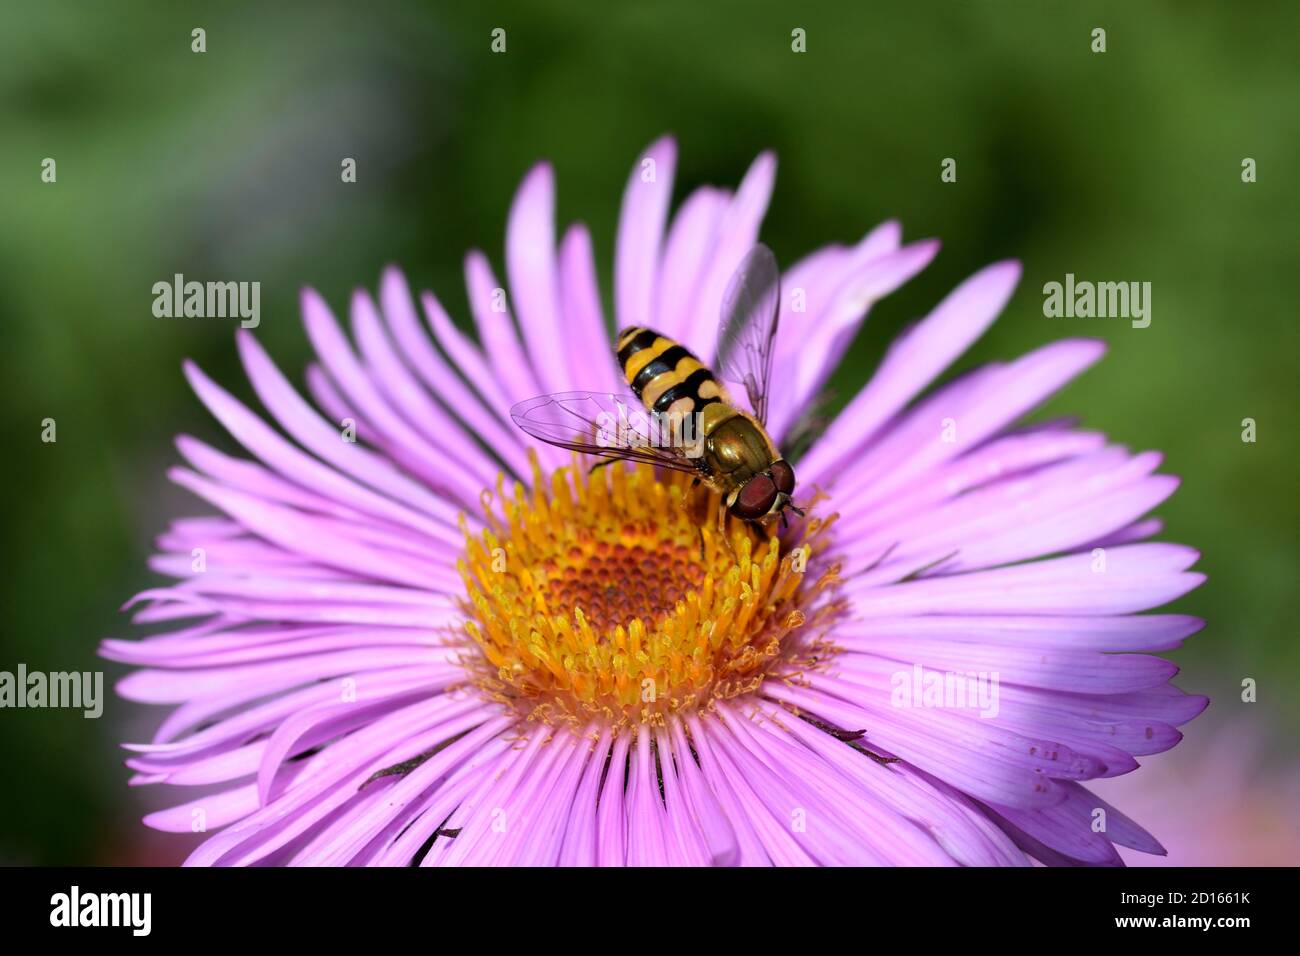 France, Haute Saone, Plancher Bas, garden, Fly (Epistrophe nitidicollis) foraging on Aster, flowers Stock Photo